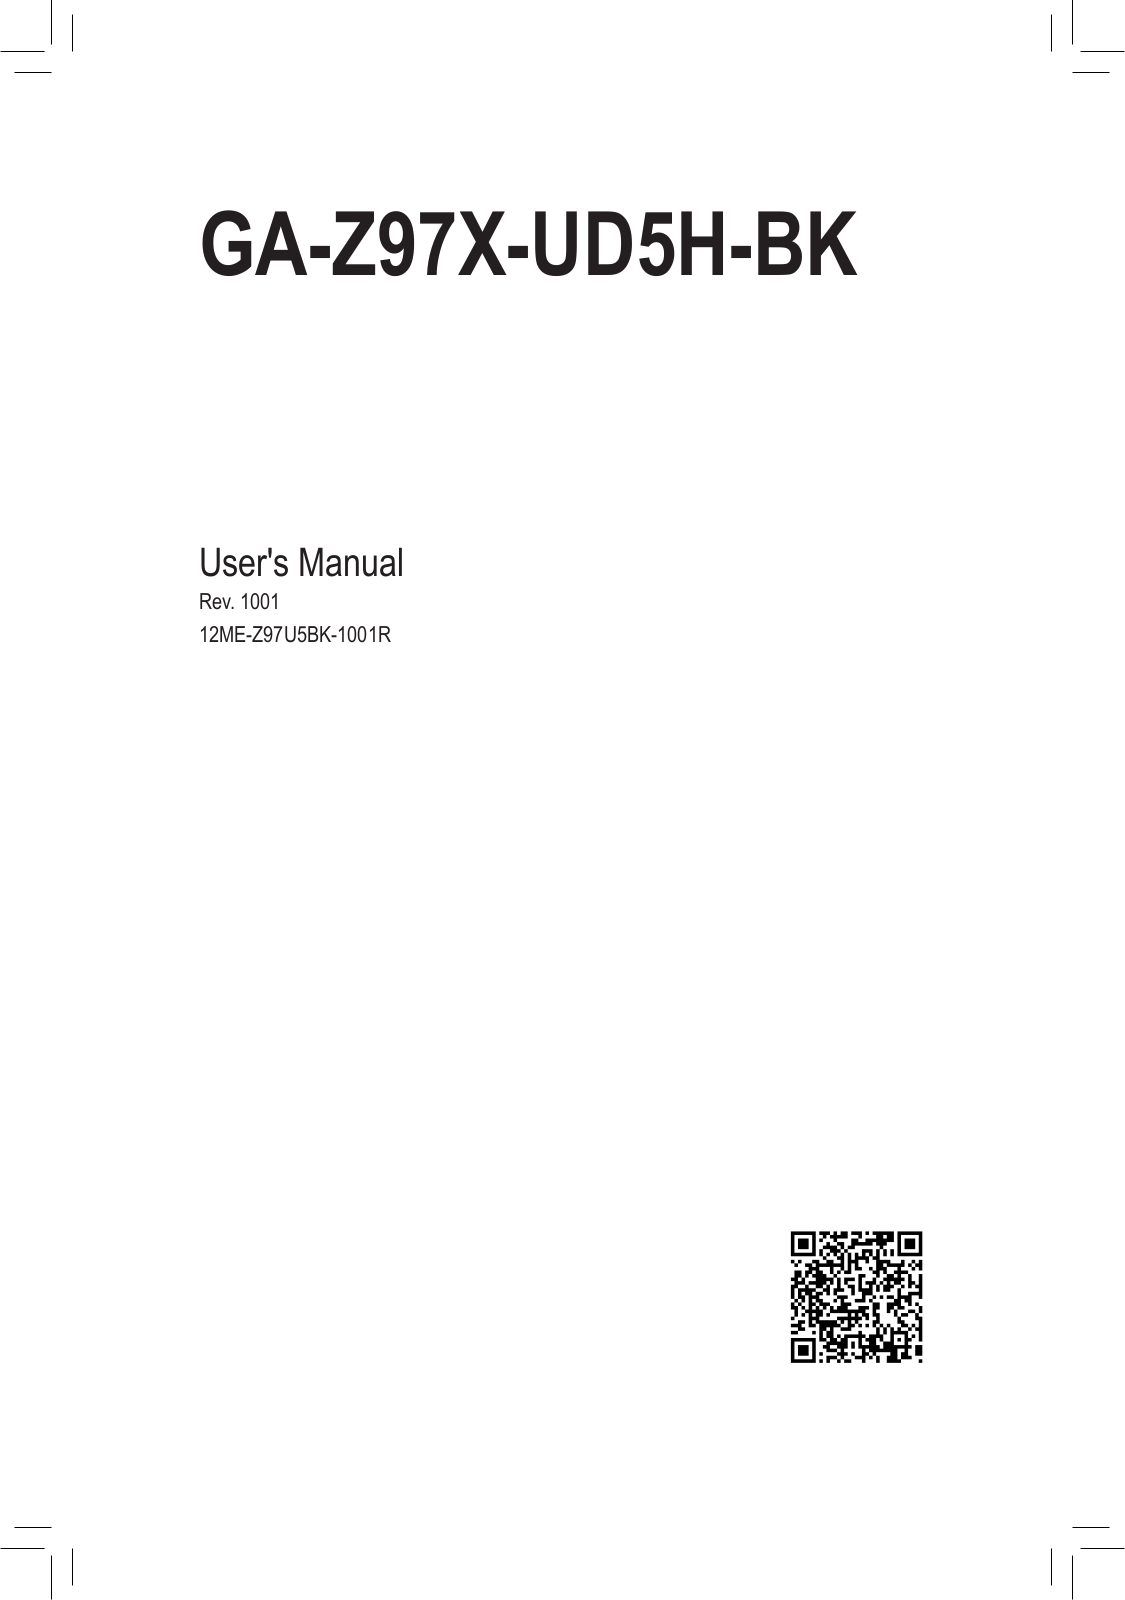 Gigabyte GA-Z97X-UD5H-BK Manual